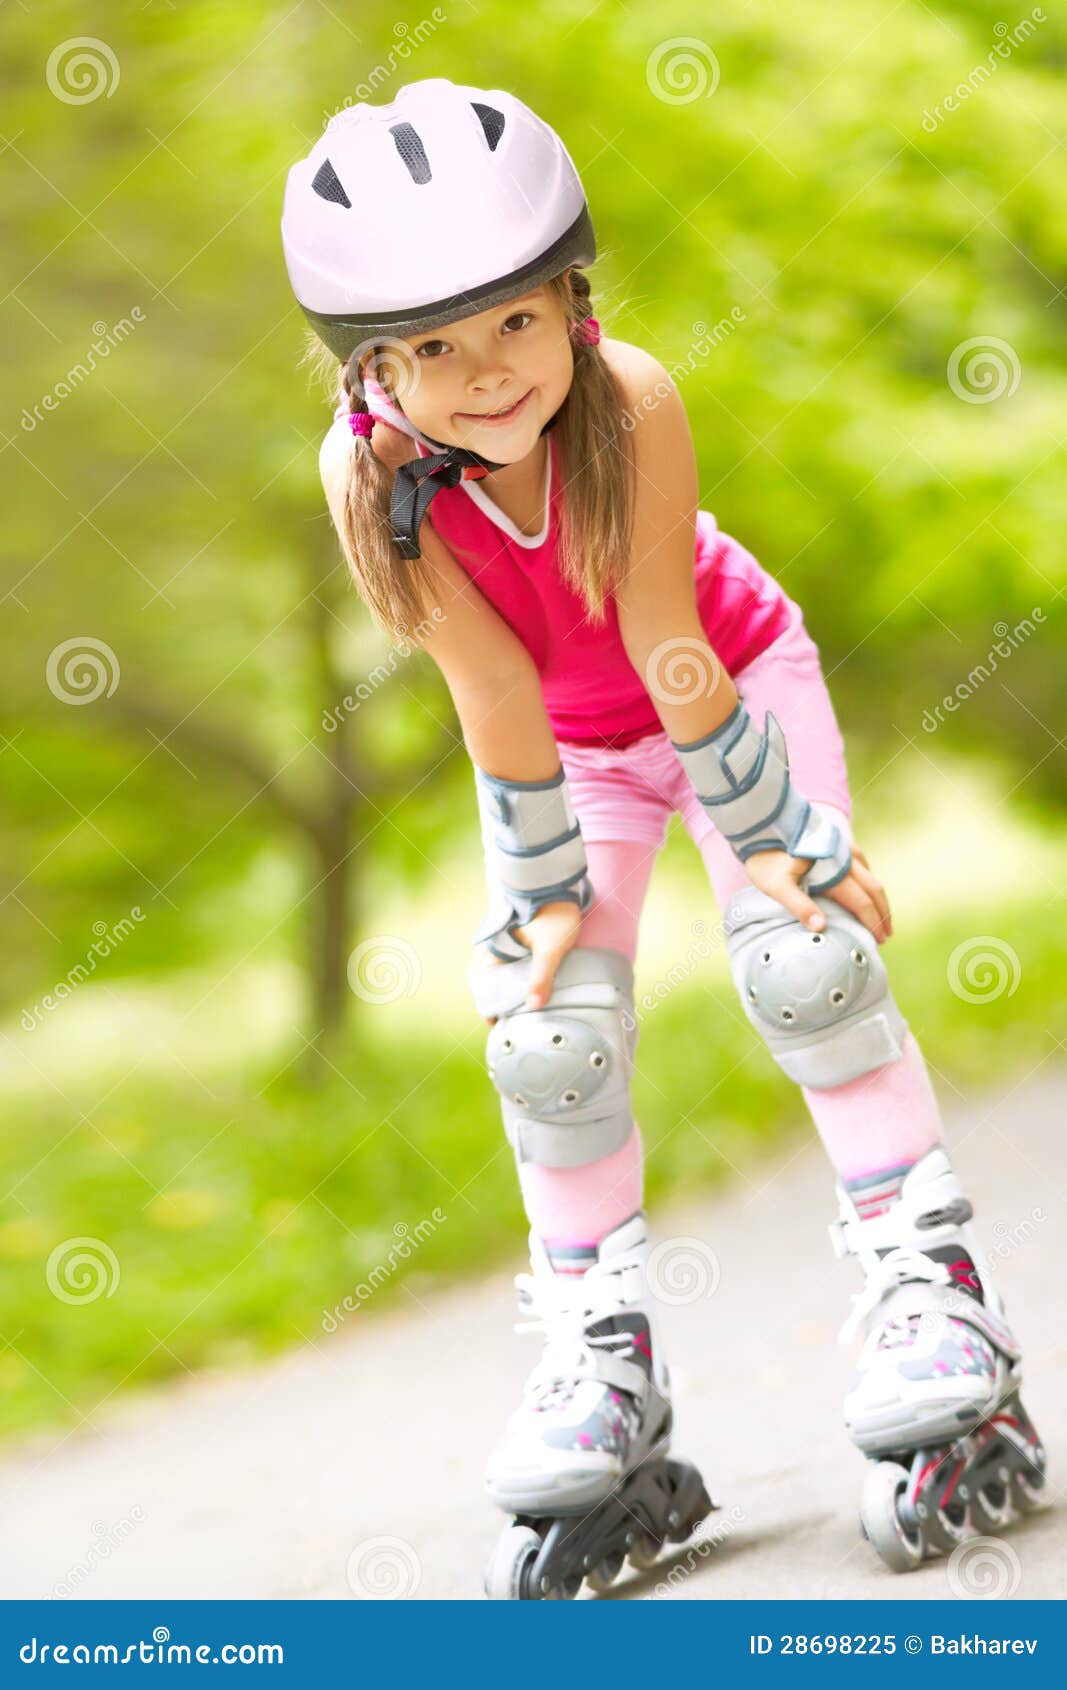 Girl On Roller Skates Royalty Free Stock Photo - Image: 28698225